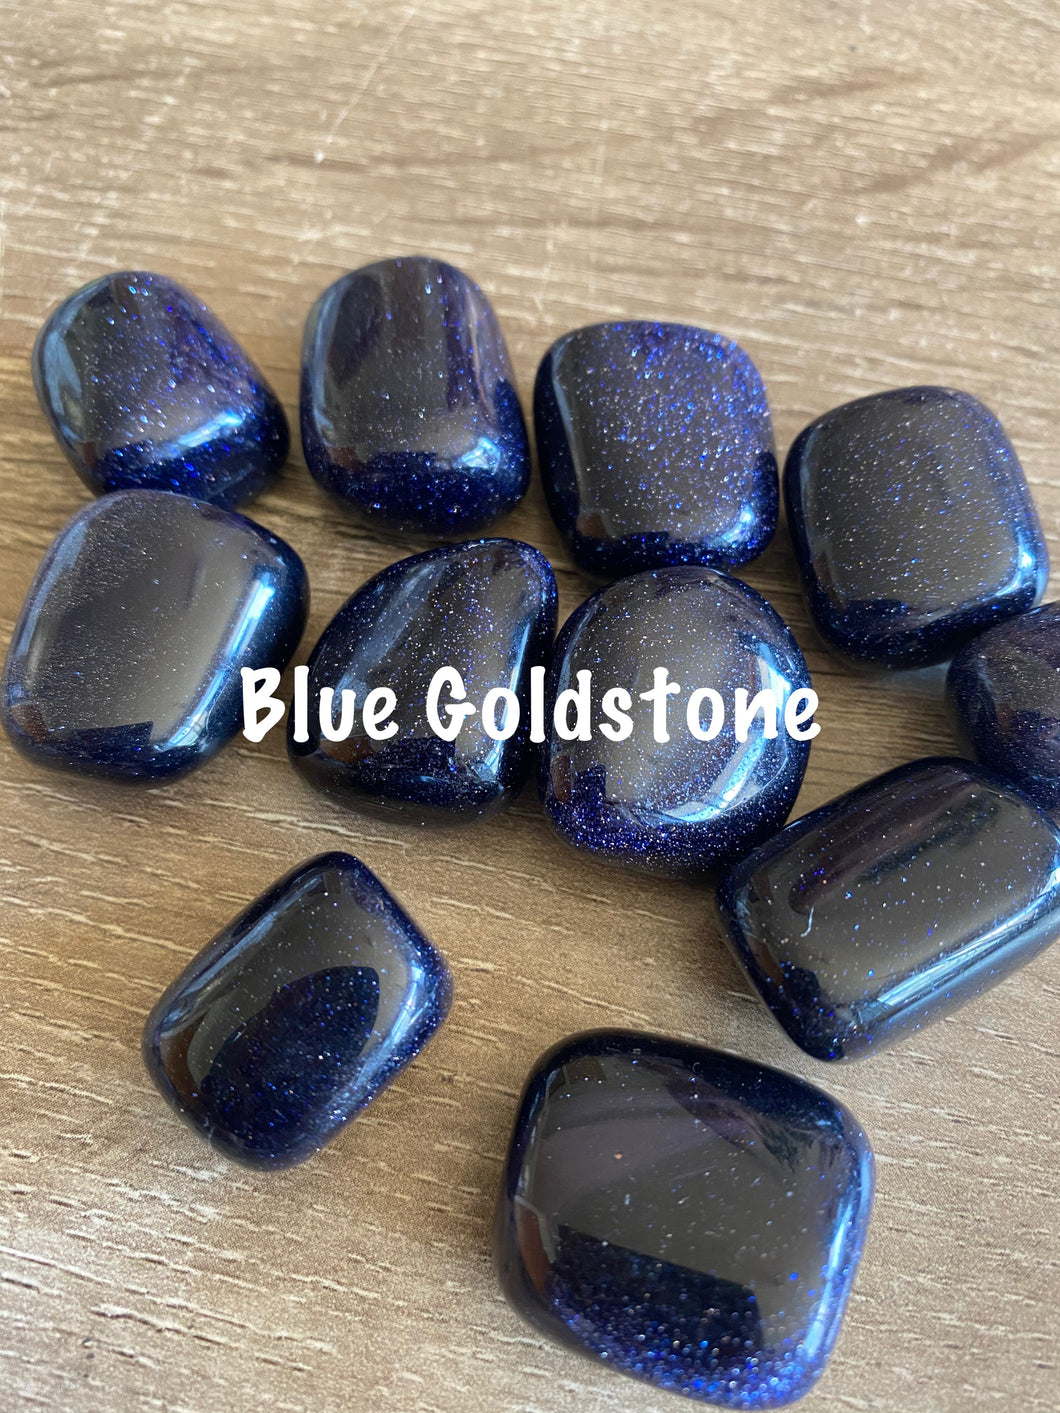 Blue goldstone